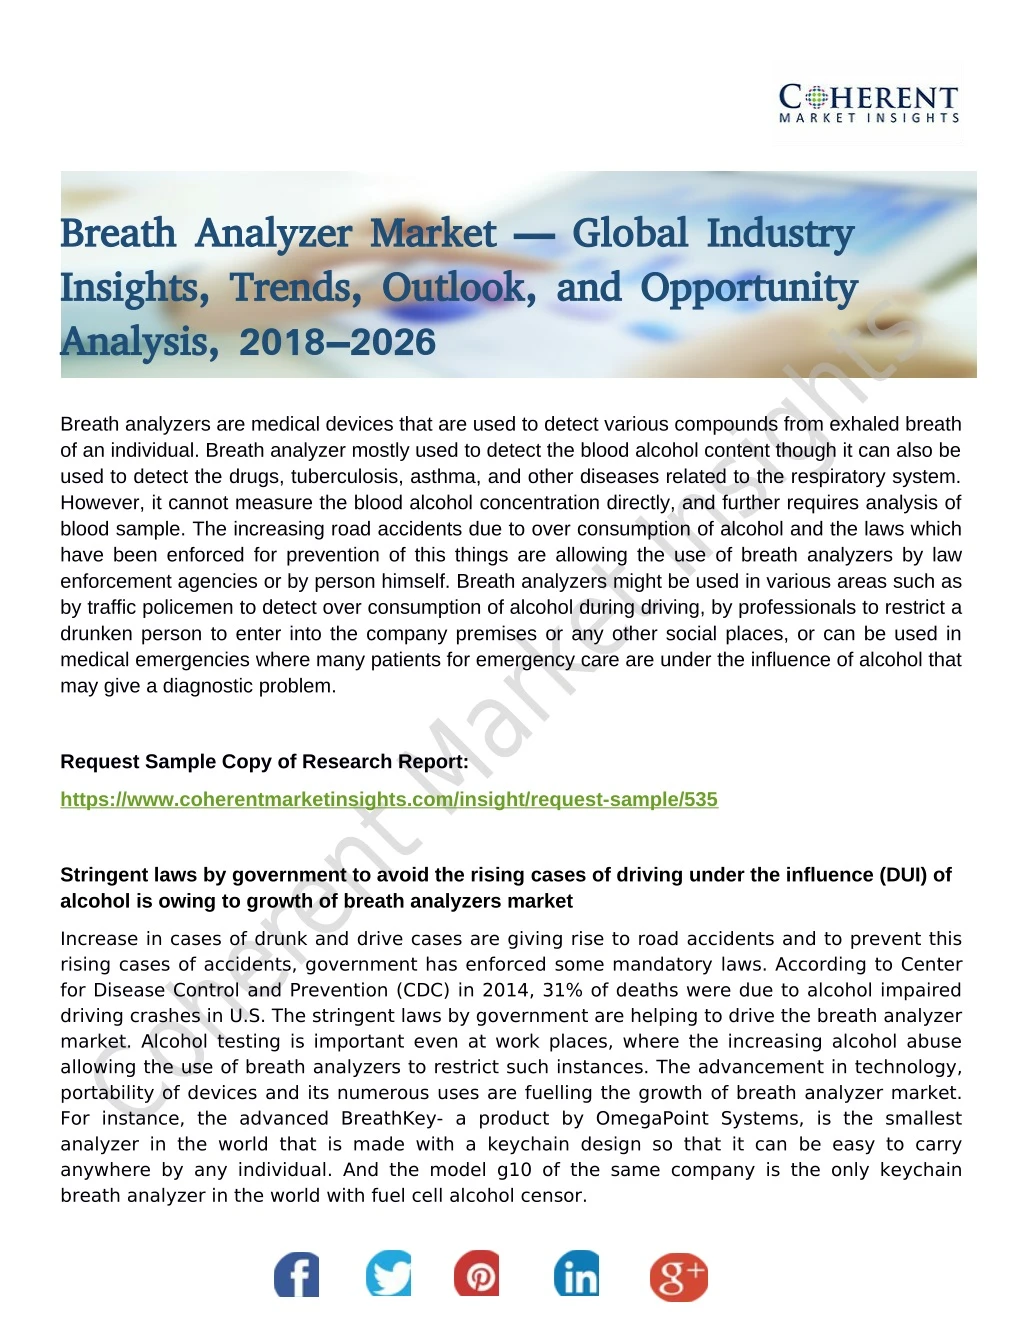 breath analyzer market global industry breath